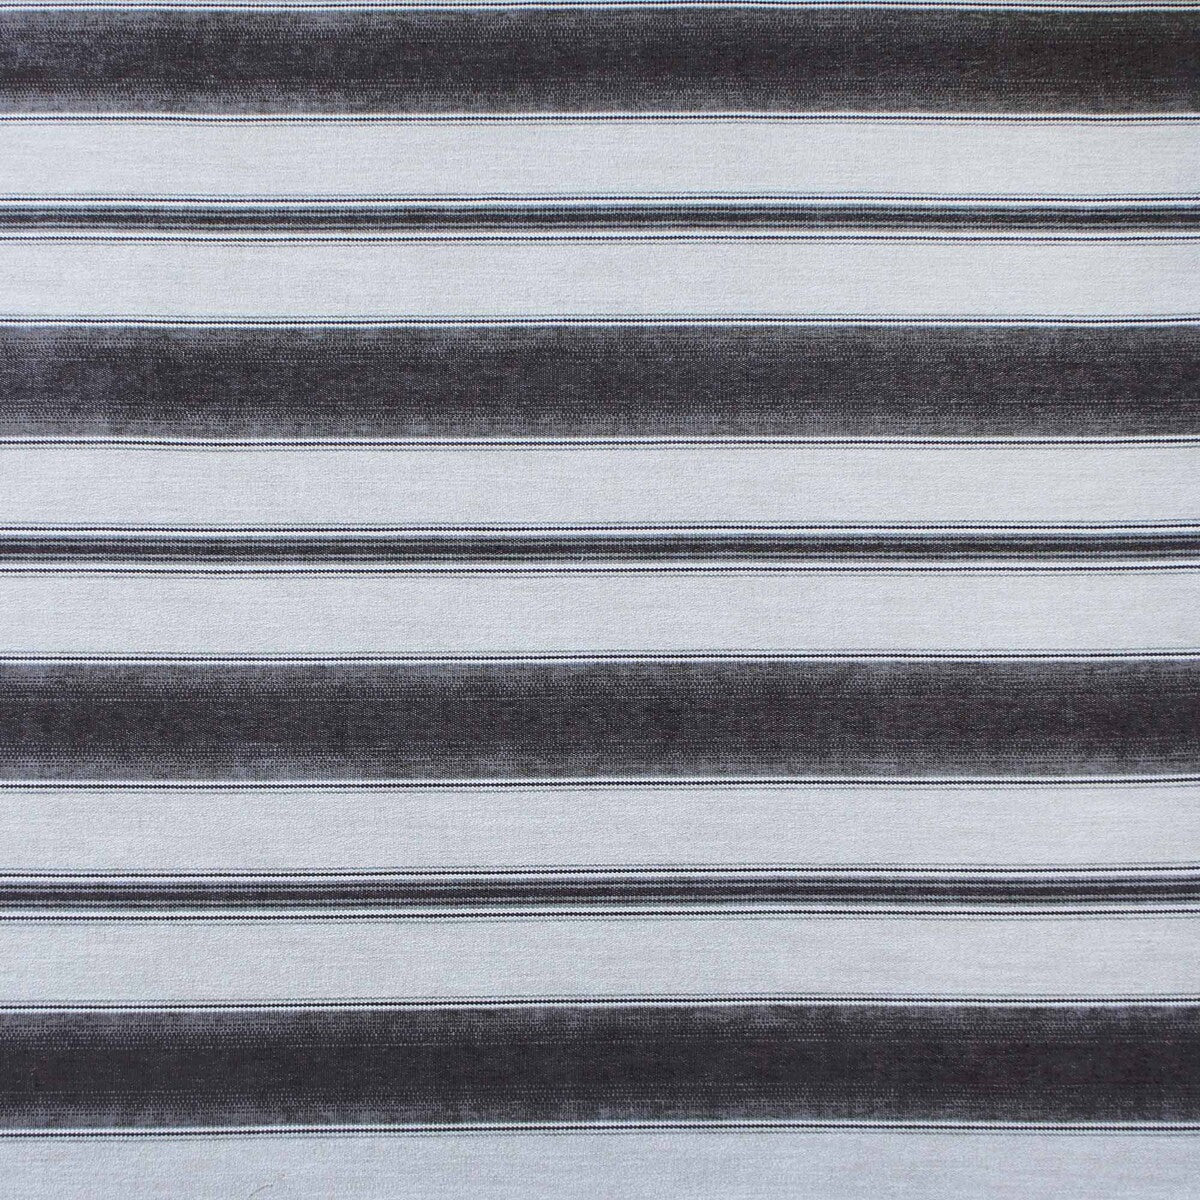 Teodosio fabric in onyx color - pattern LCT1125.004.0 - by Gaston y Daniela in the Lorenzo Castillo IX Hesperia collection